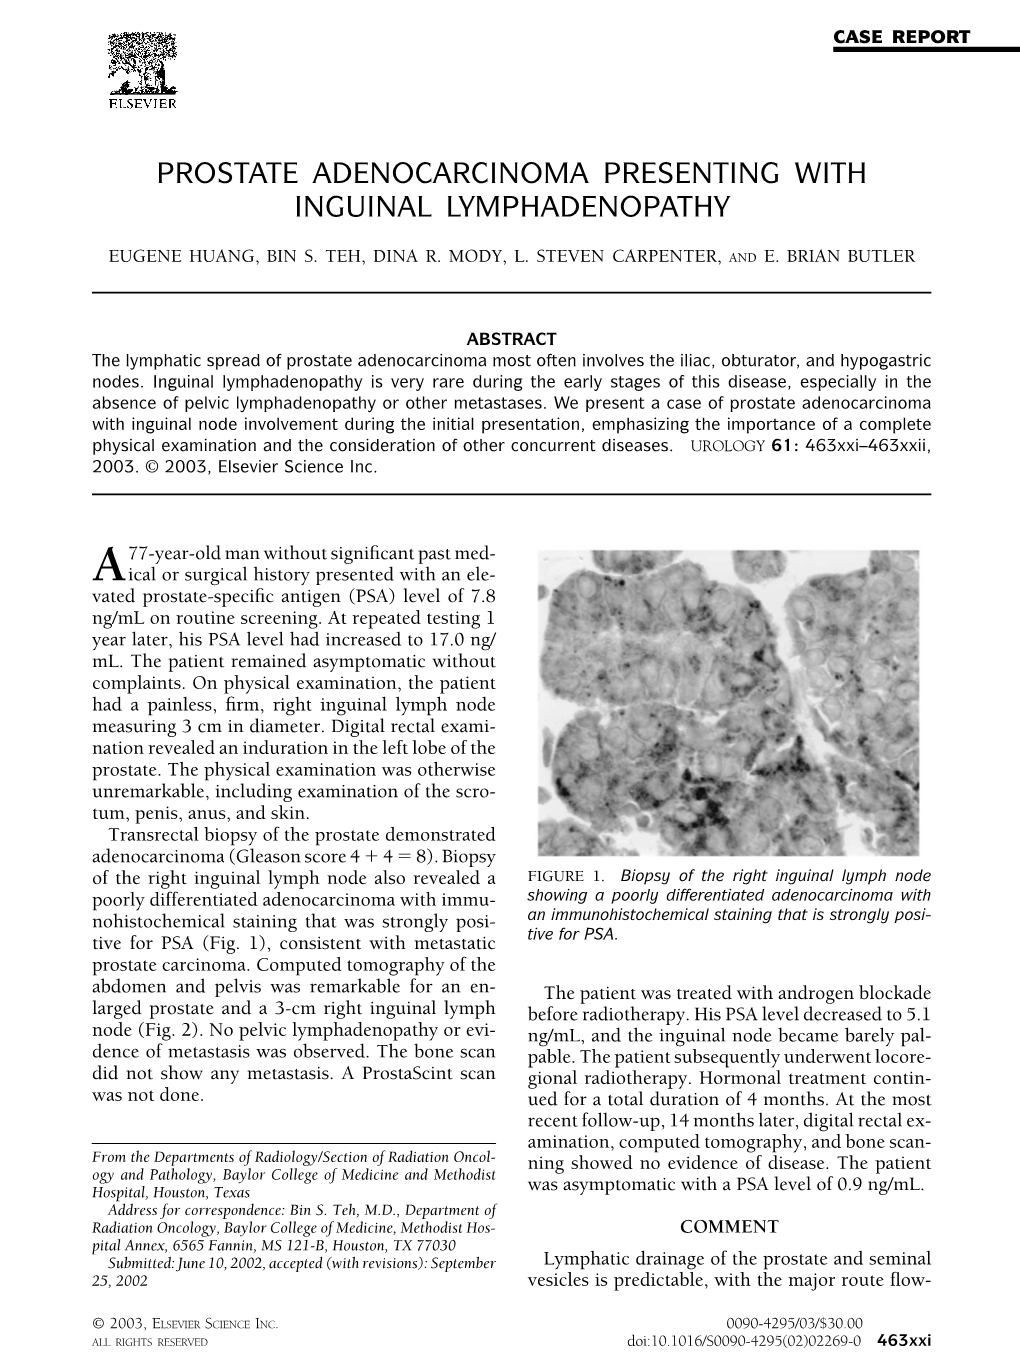 Prostate Adenocarcinoma Presenting with Inguinal Lymphadenopathy